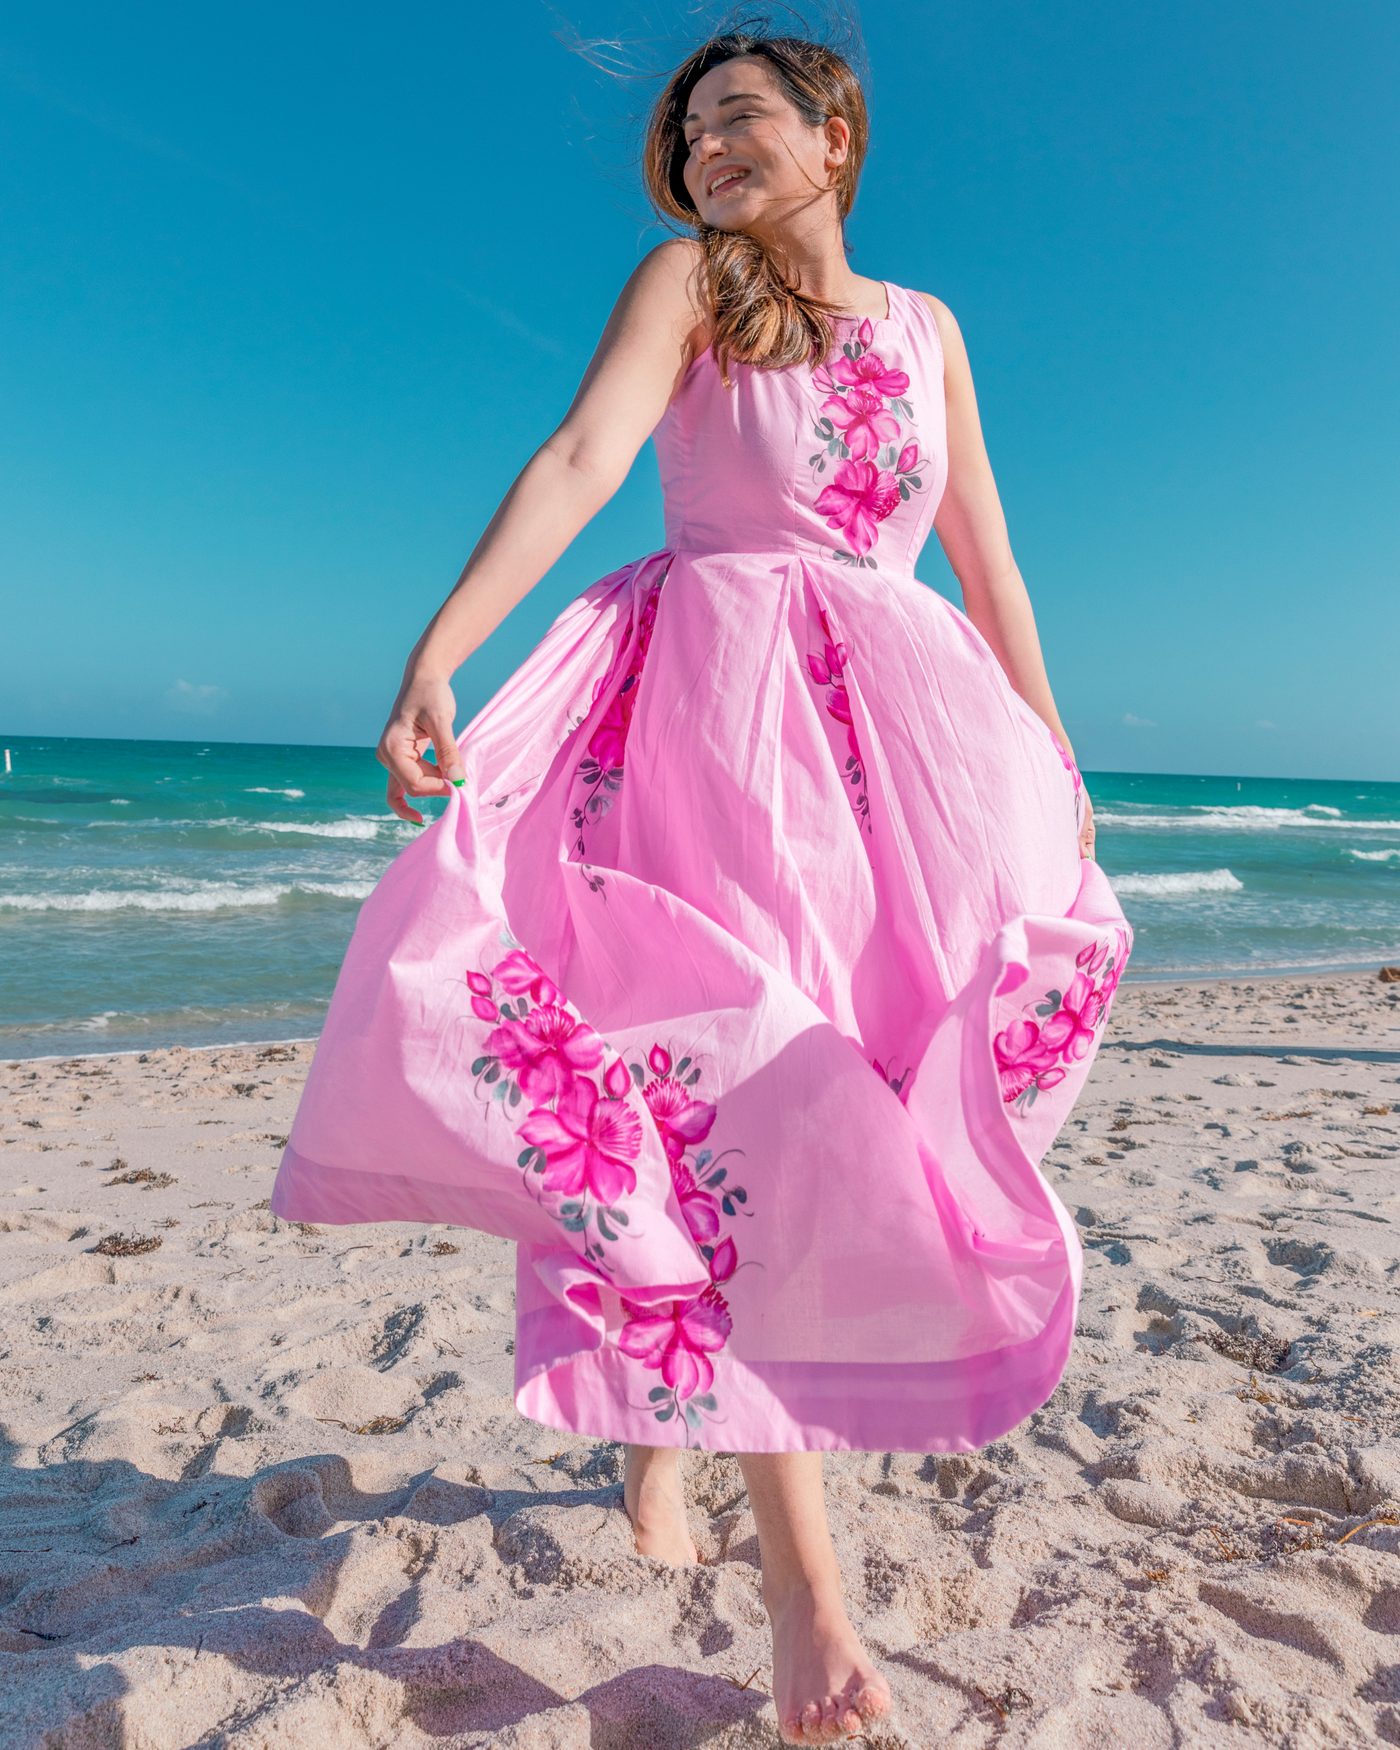 Pink Costa Handpainted Cotton Dress